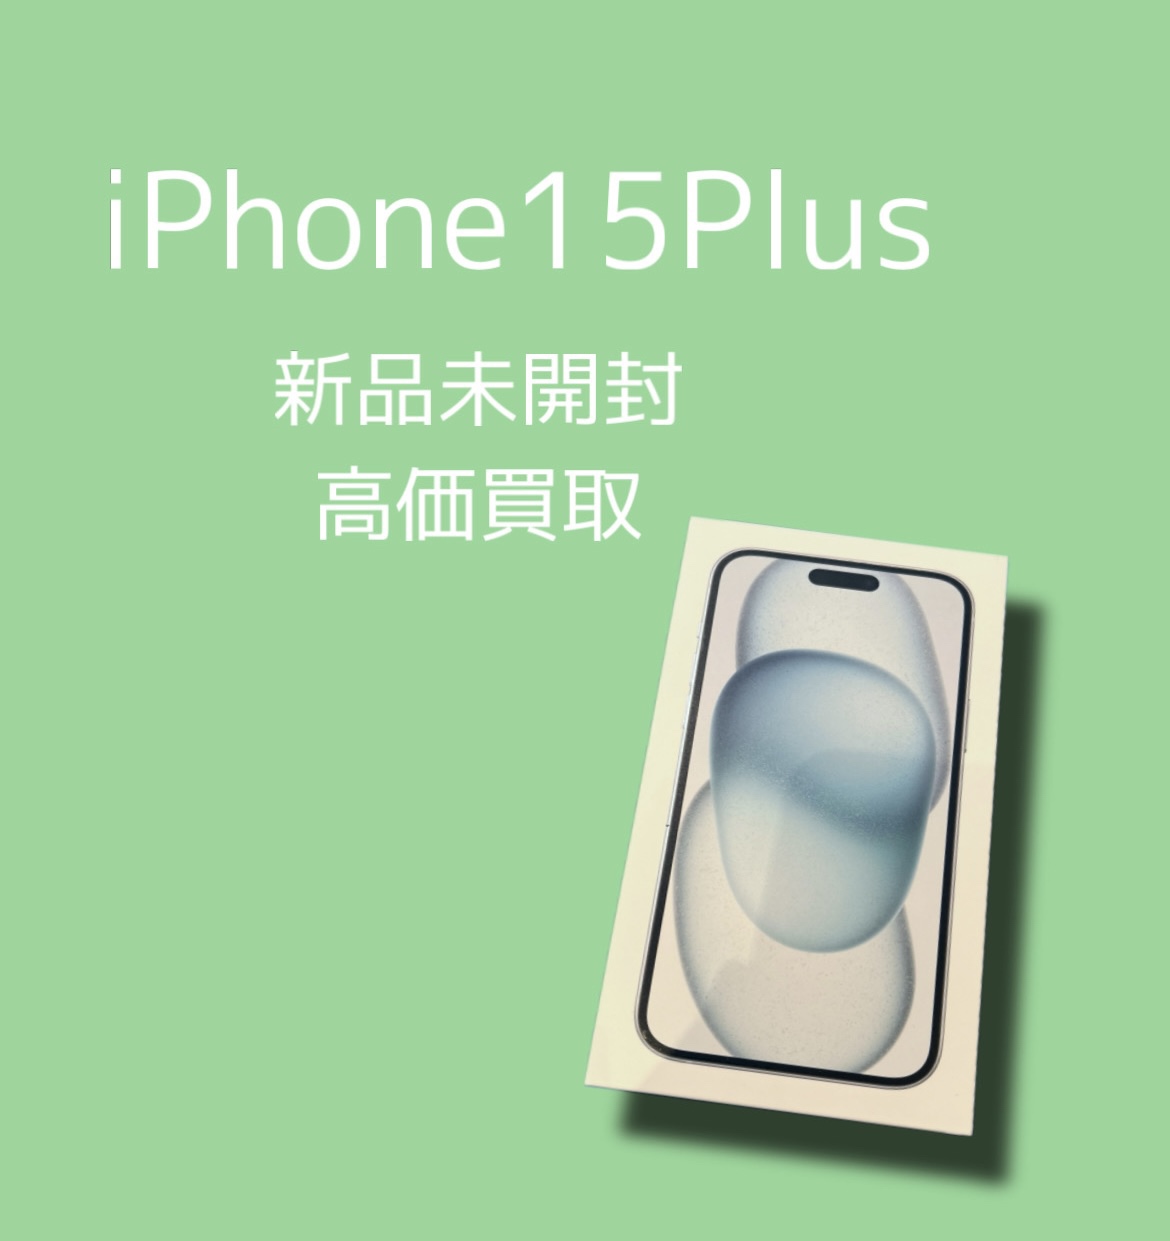 iPhone15Plus・256GB・SIMフリー・新品未開封品【天神地下街店】